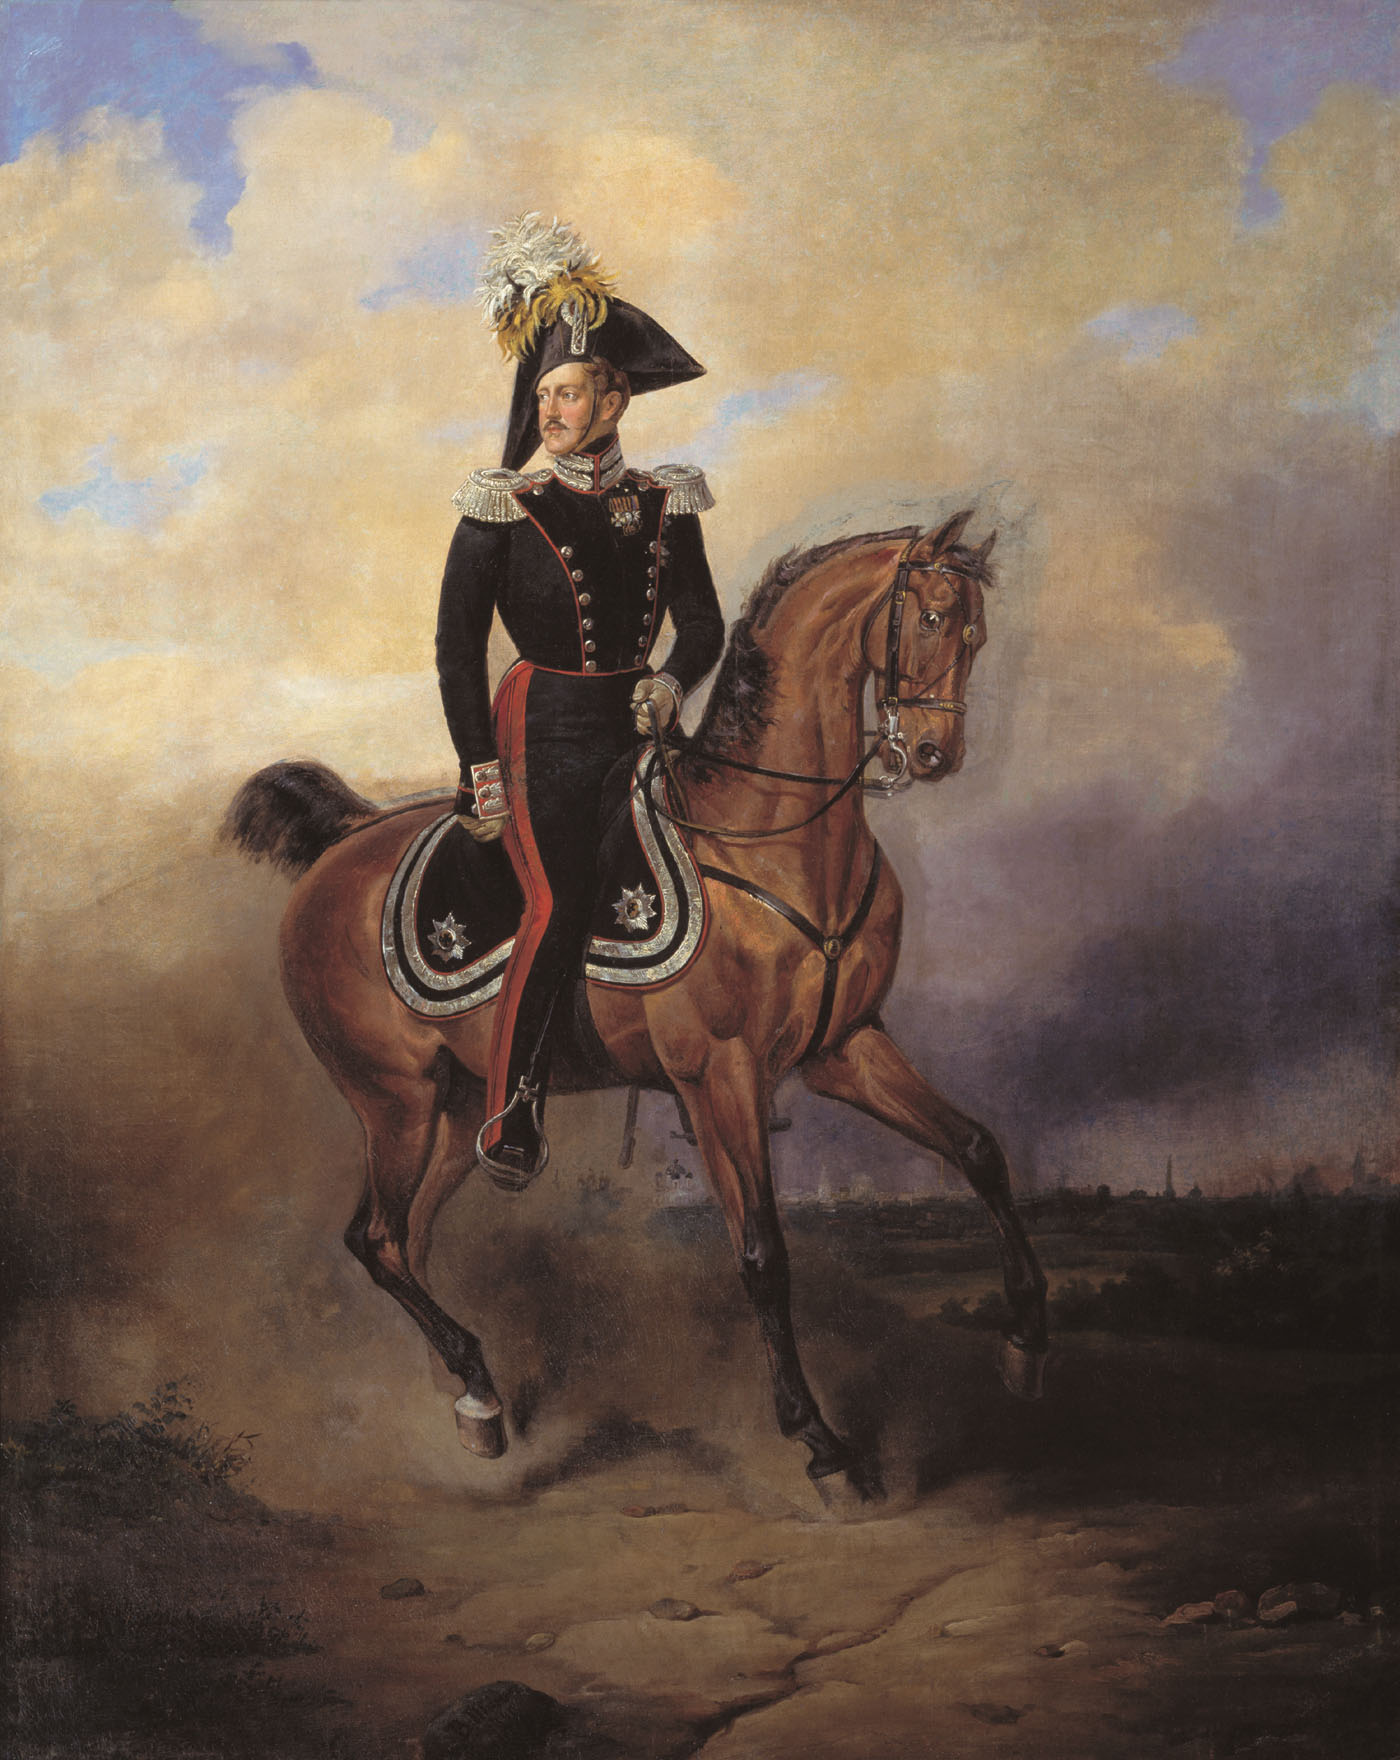 Василий Тимм. Портрет императора Николая I на коне. 1840.